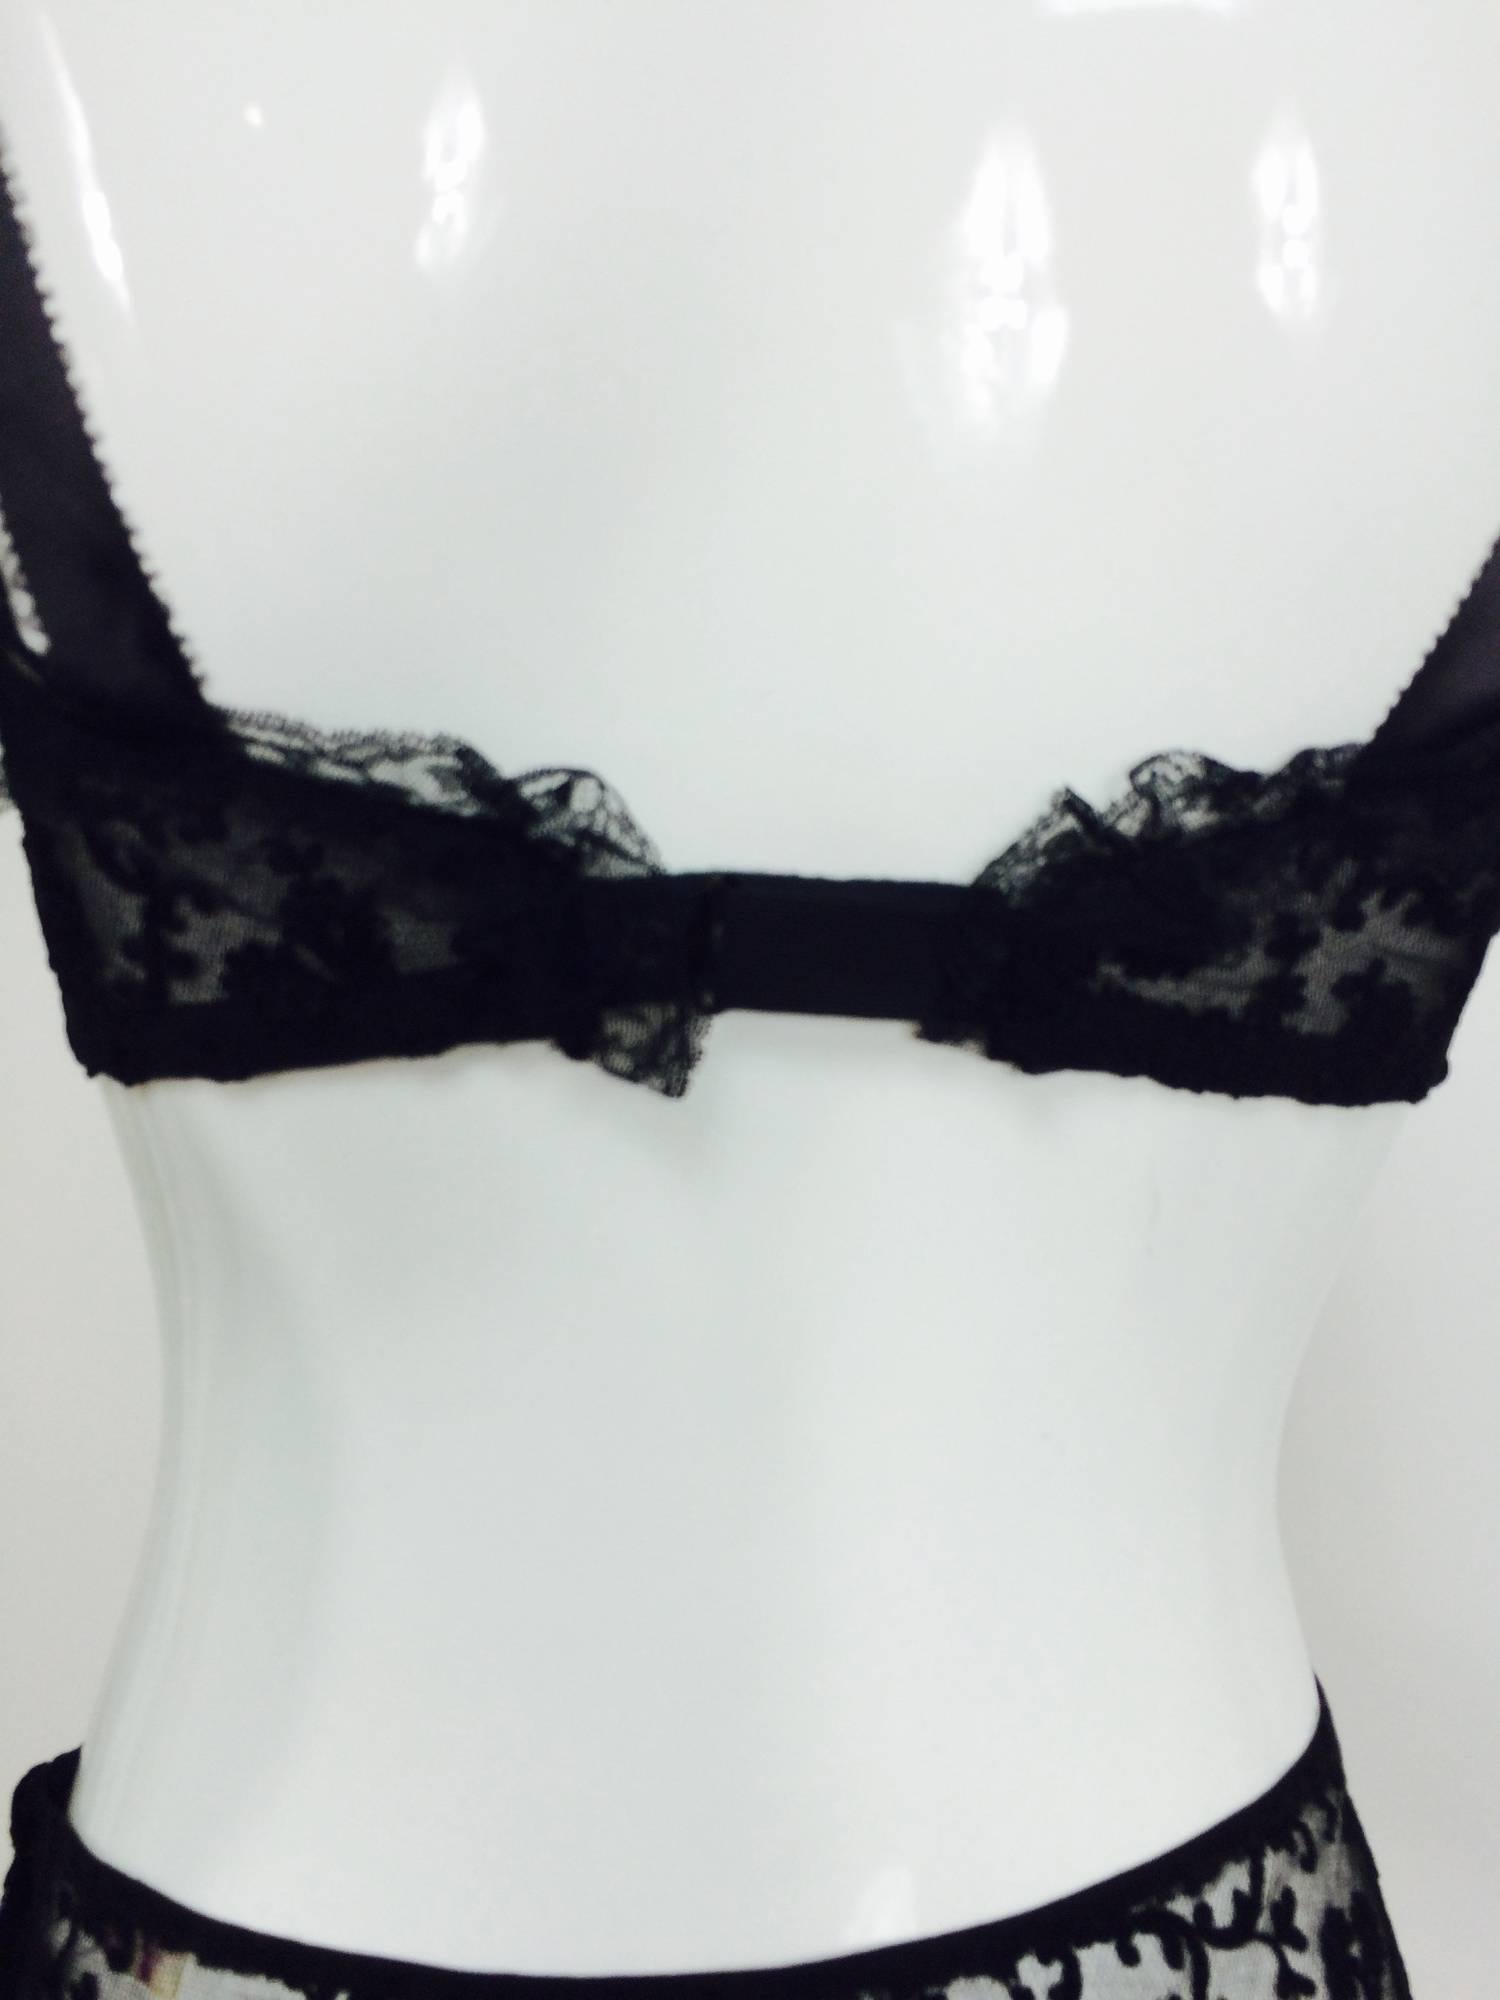 Women's 1940s pin up black lace bra & panties unworn labeled Joan's Specialty